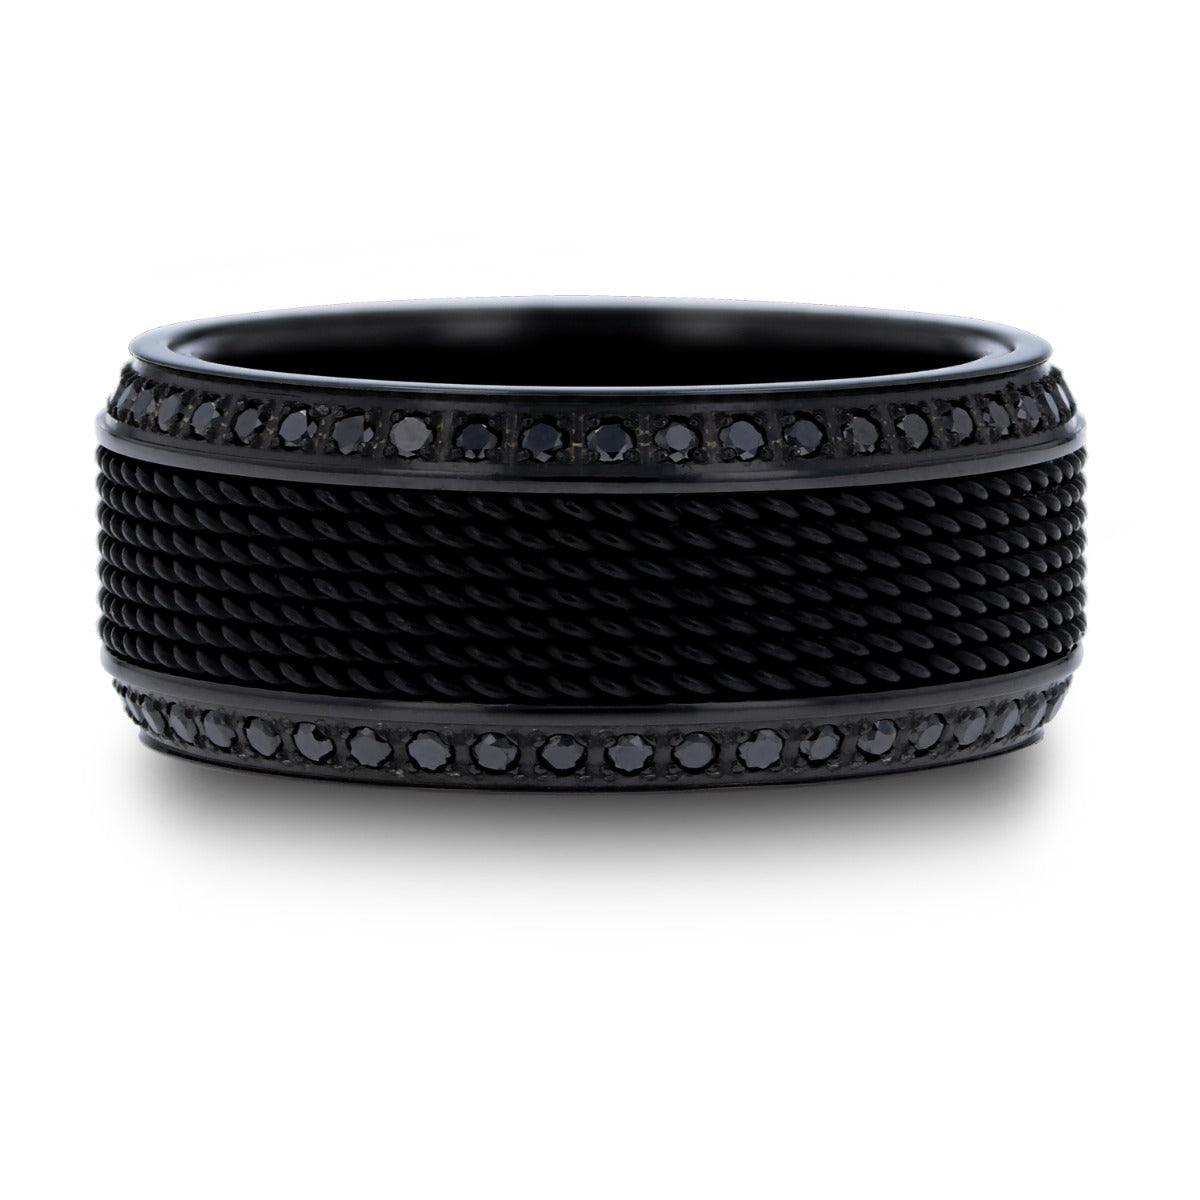 KNIGHT - Steel Chain Black Titanium Wedding Ring Polished Beveled Edges Set with Round Black Diamonds - 10mm - The Rutile Ltd